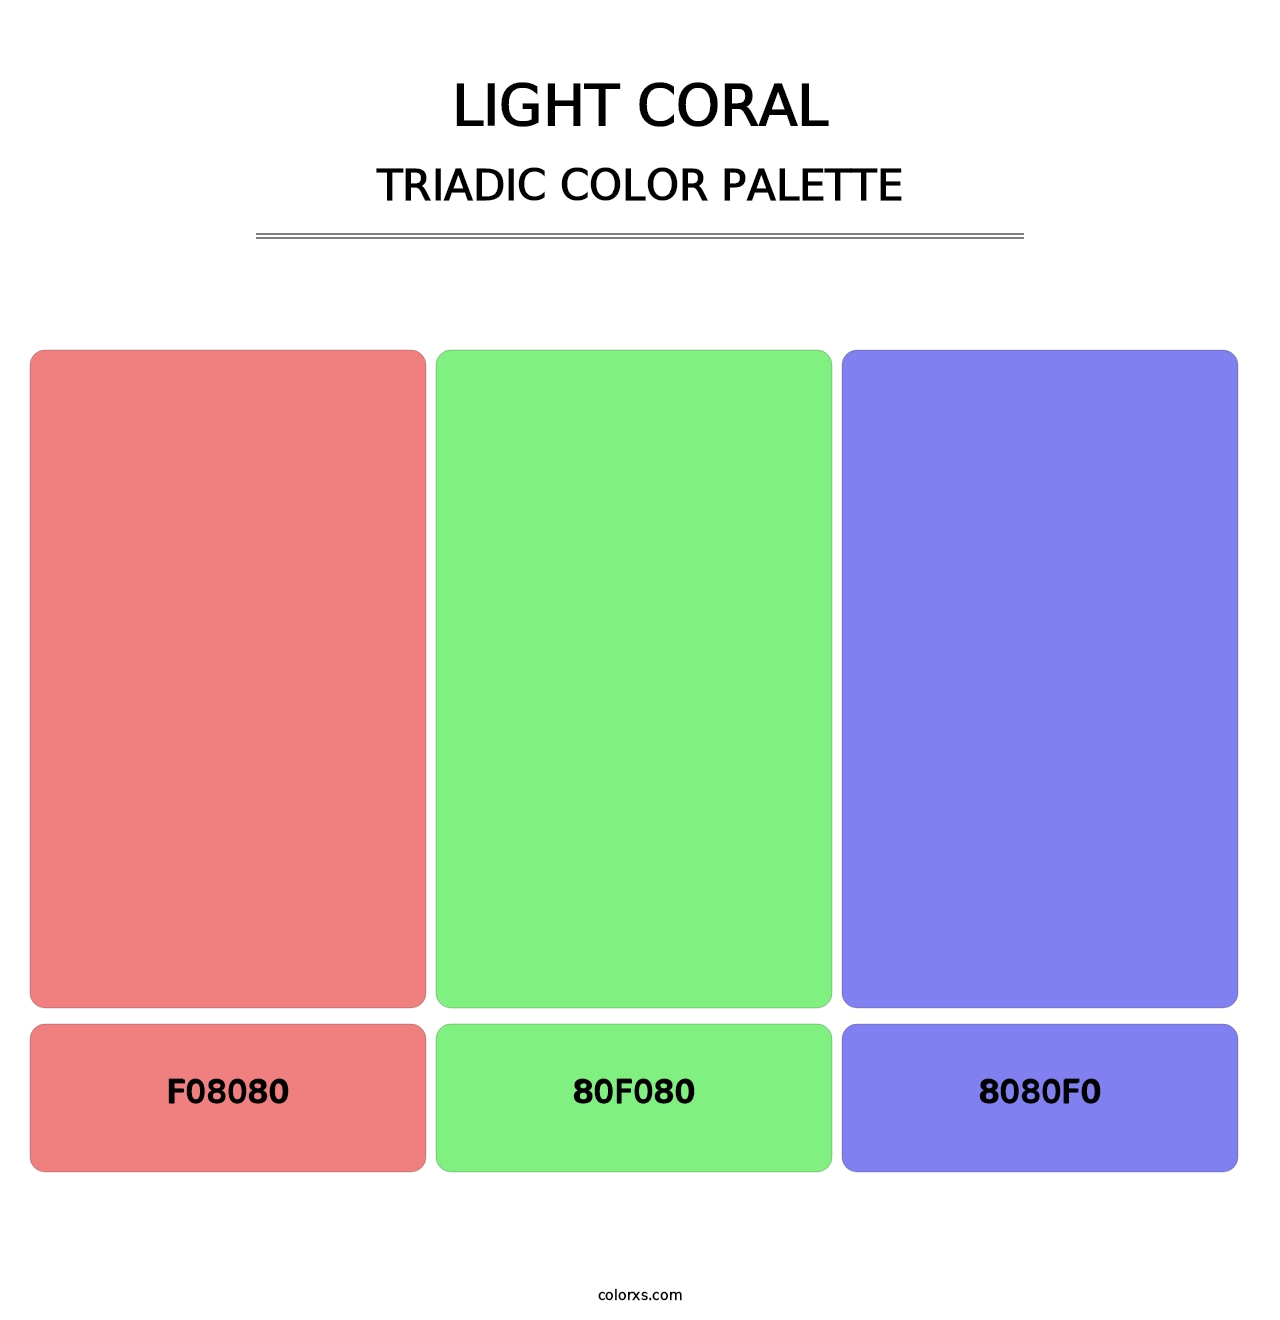 Light Coral - Triadic Color Palette